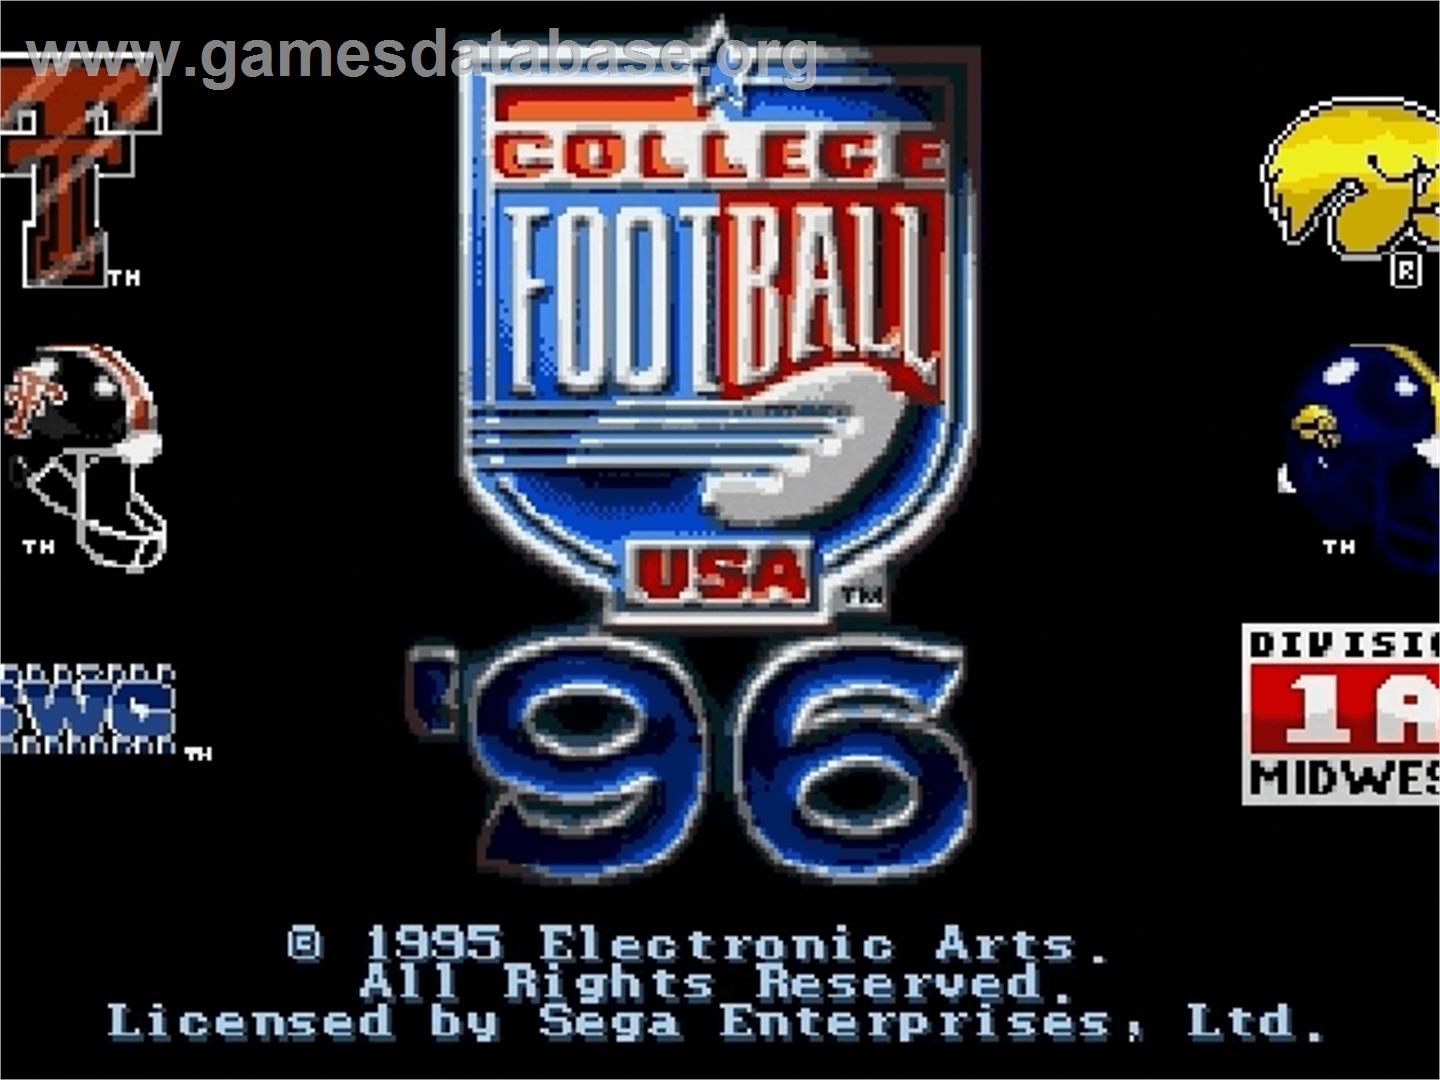 College Football USA 96 - Sega Genesis - Artwork - Title Screen